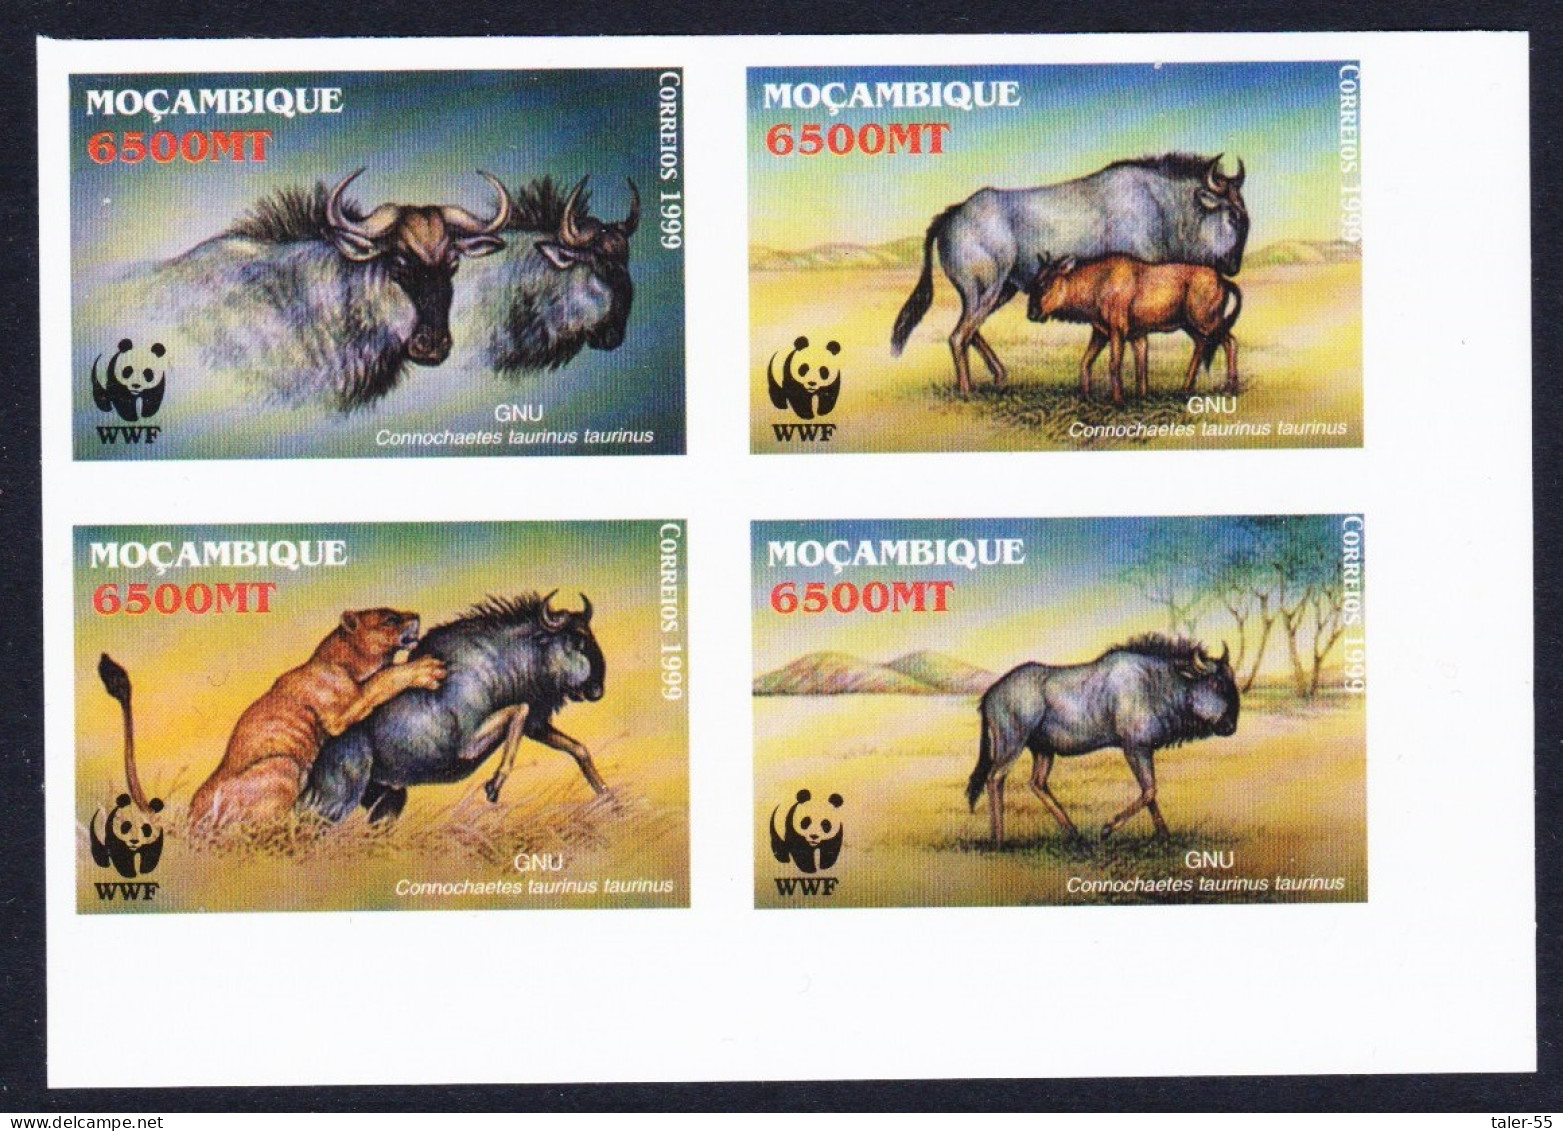 Mozambique WWF Blue Wildebeest Imperf Block Of 4 WWF 2000 MNH SG#1542-1545 MI#1757-1760 Sc#1377 A-d - Mozambique